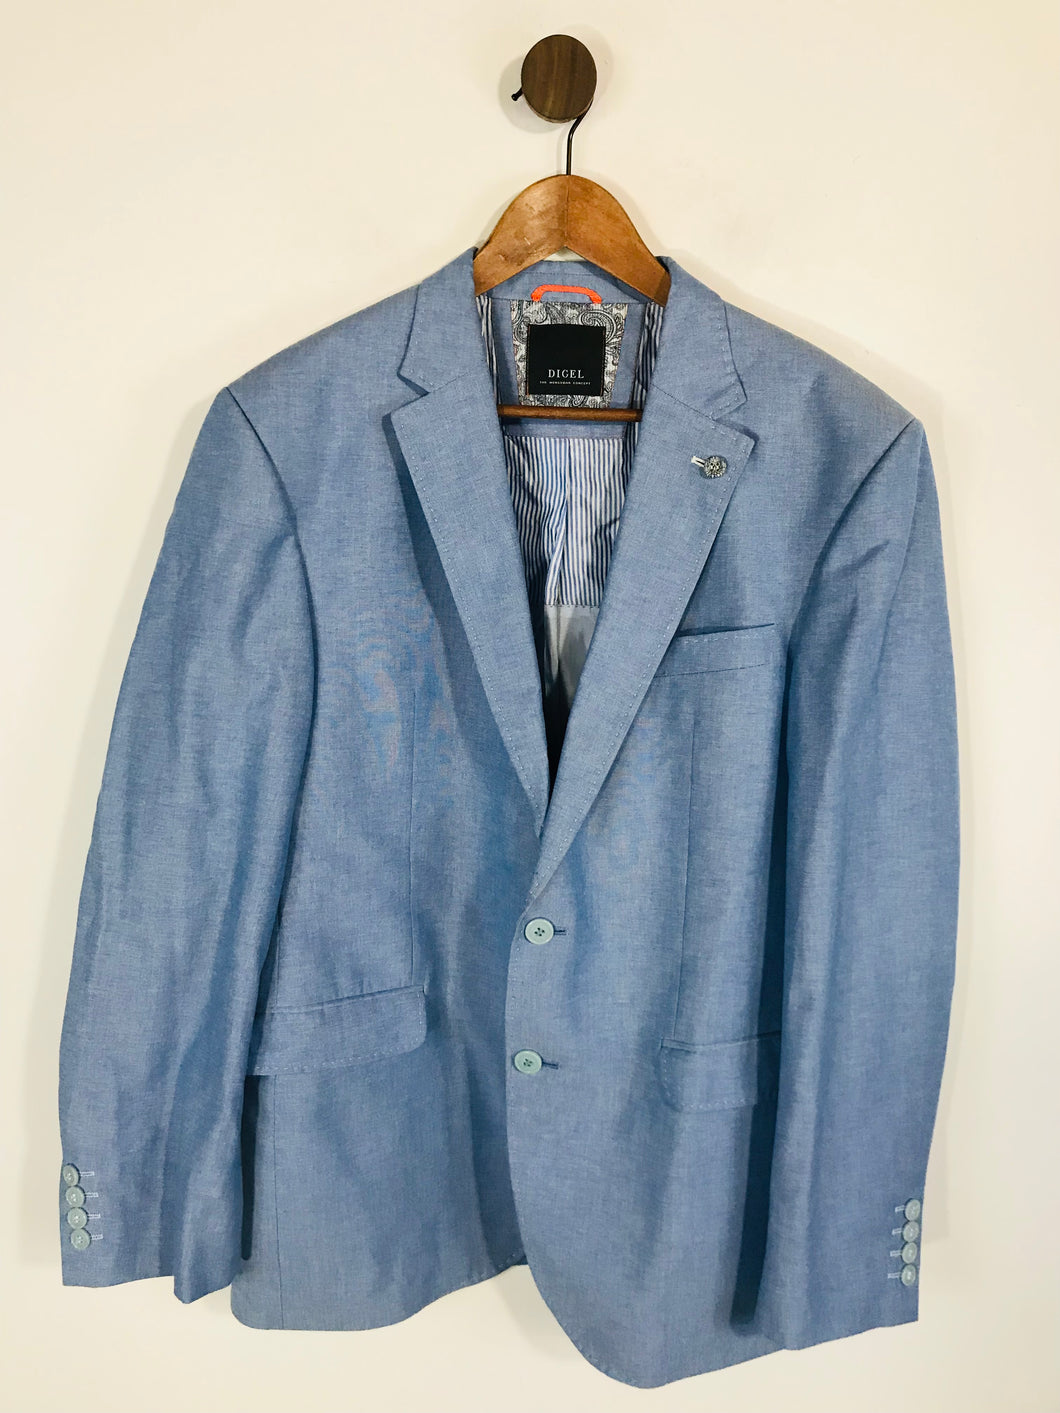 Digel Men's Smart Suit Jacket | 52 | Blue